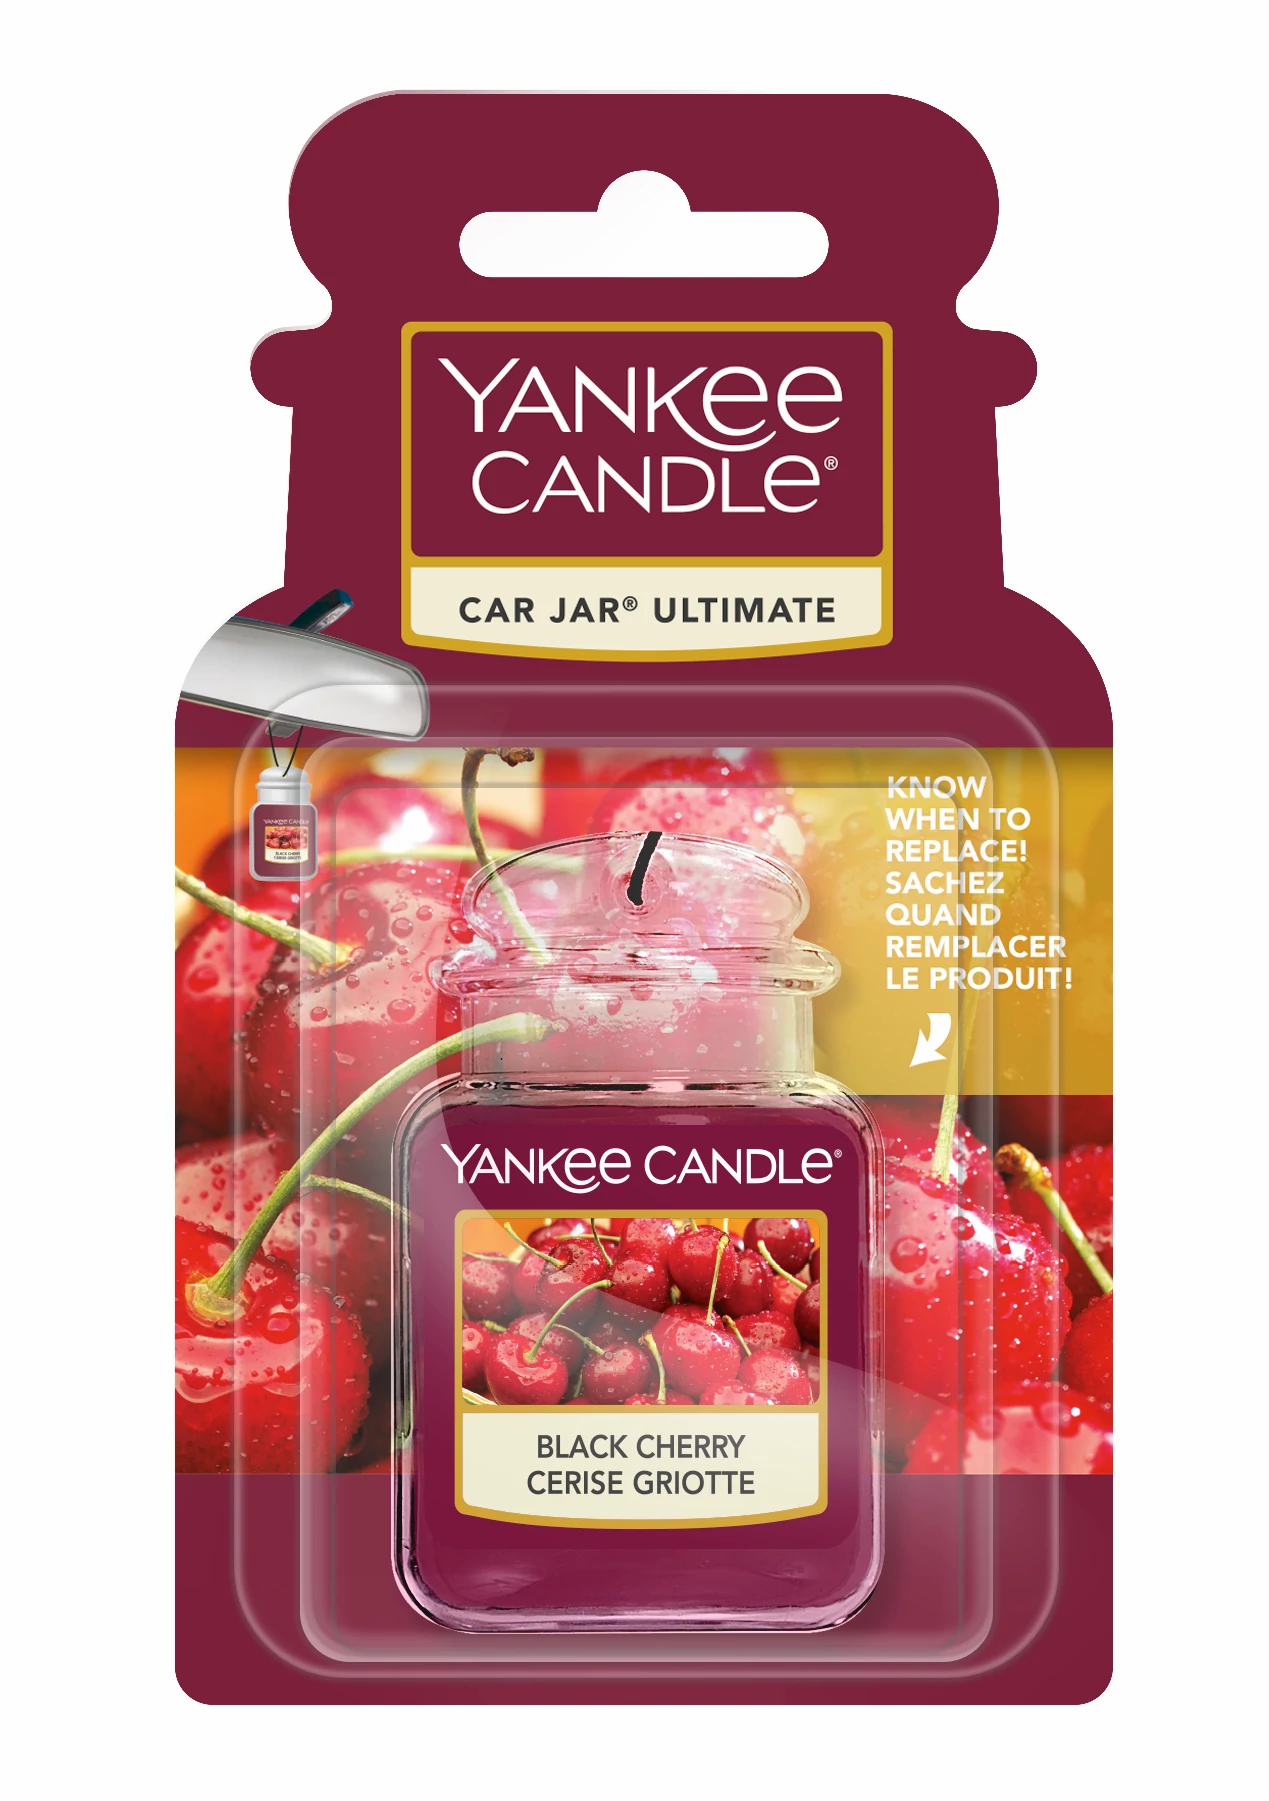 Yankee Candle - Car Jar Ultimate Black Cherry